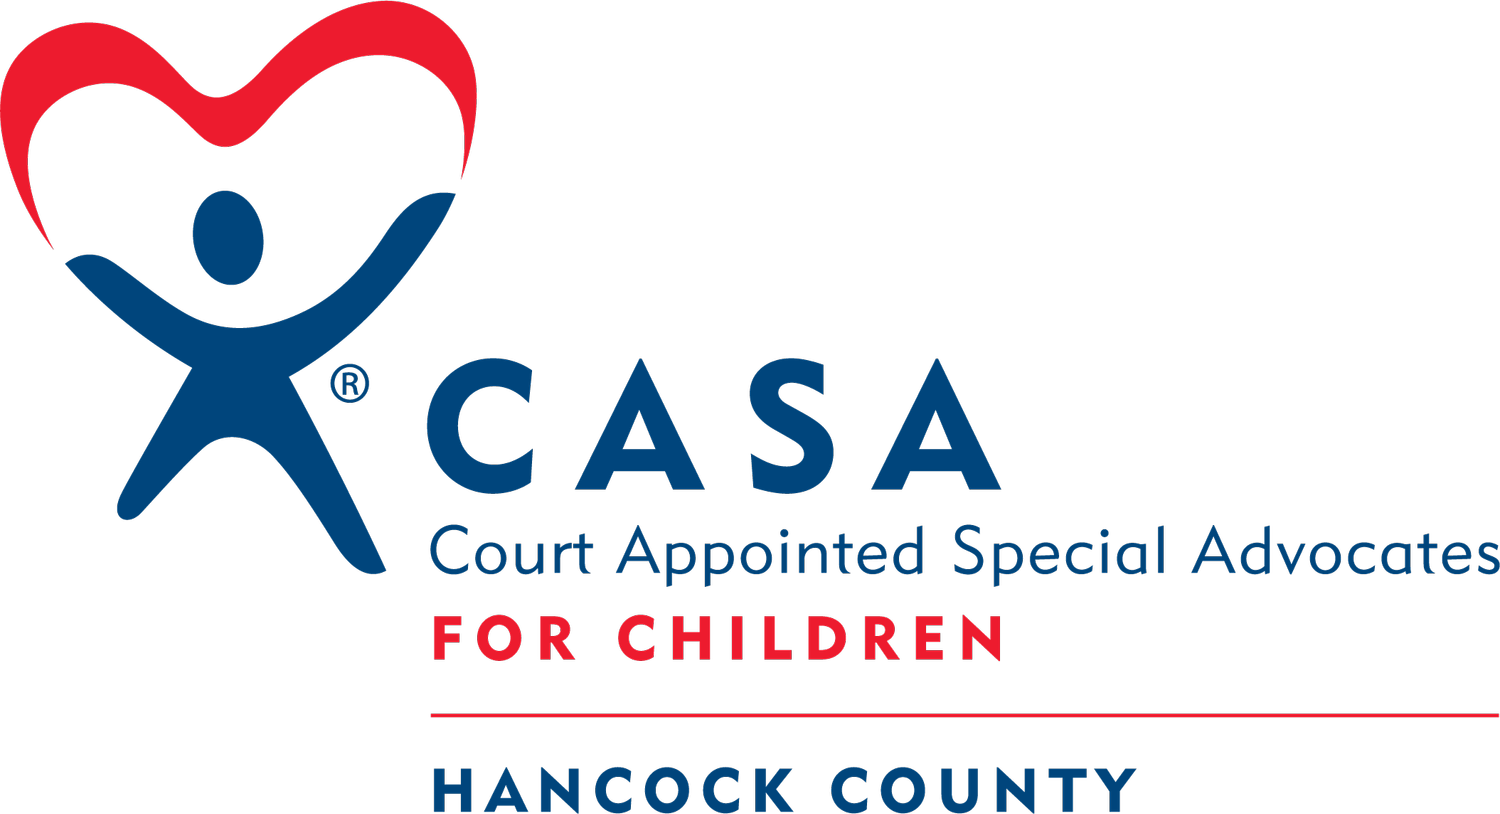 CASA of Hancock County